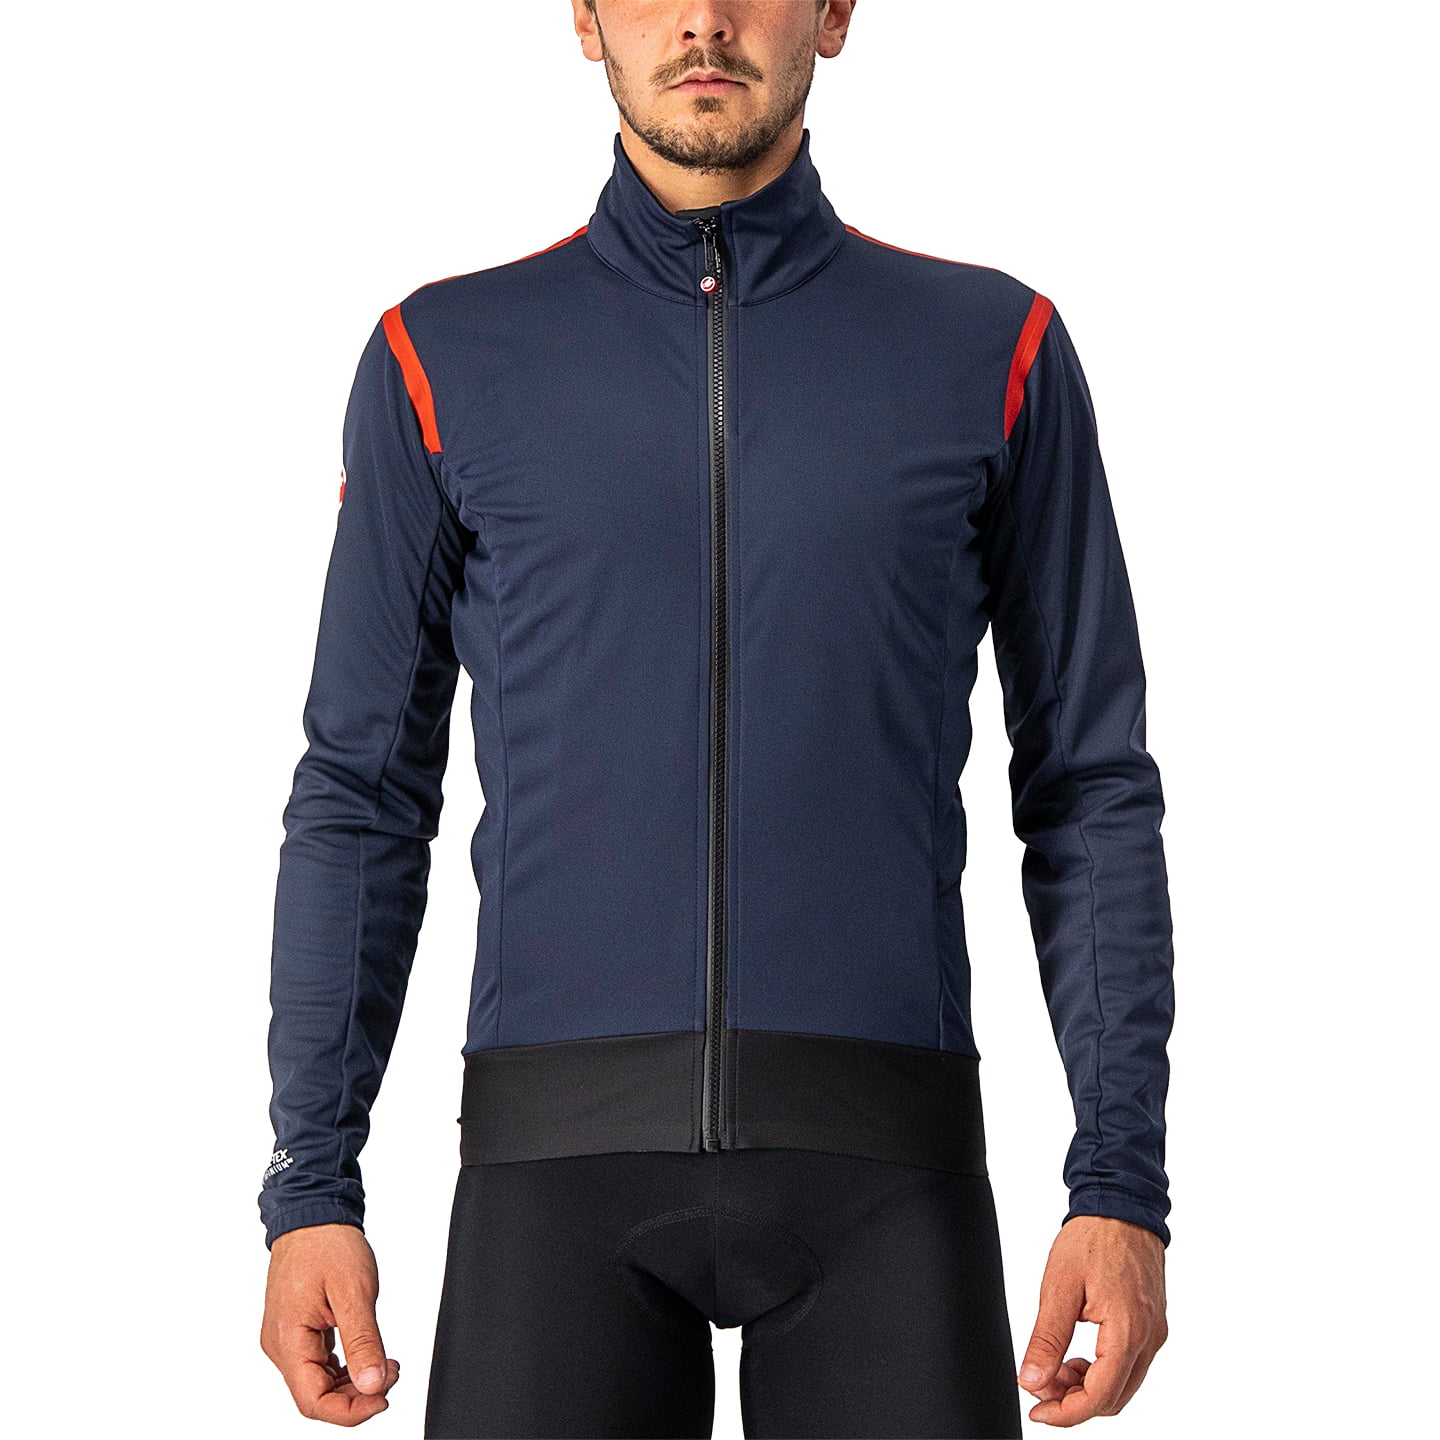 CASTELLI Alpha RoS 2 Light Jacket Light Jacket, for men, size M, Bike jacket, Cycling clothing